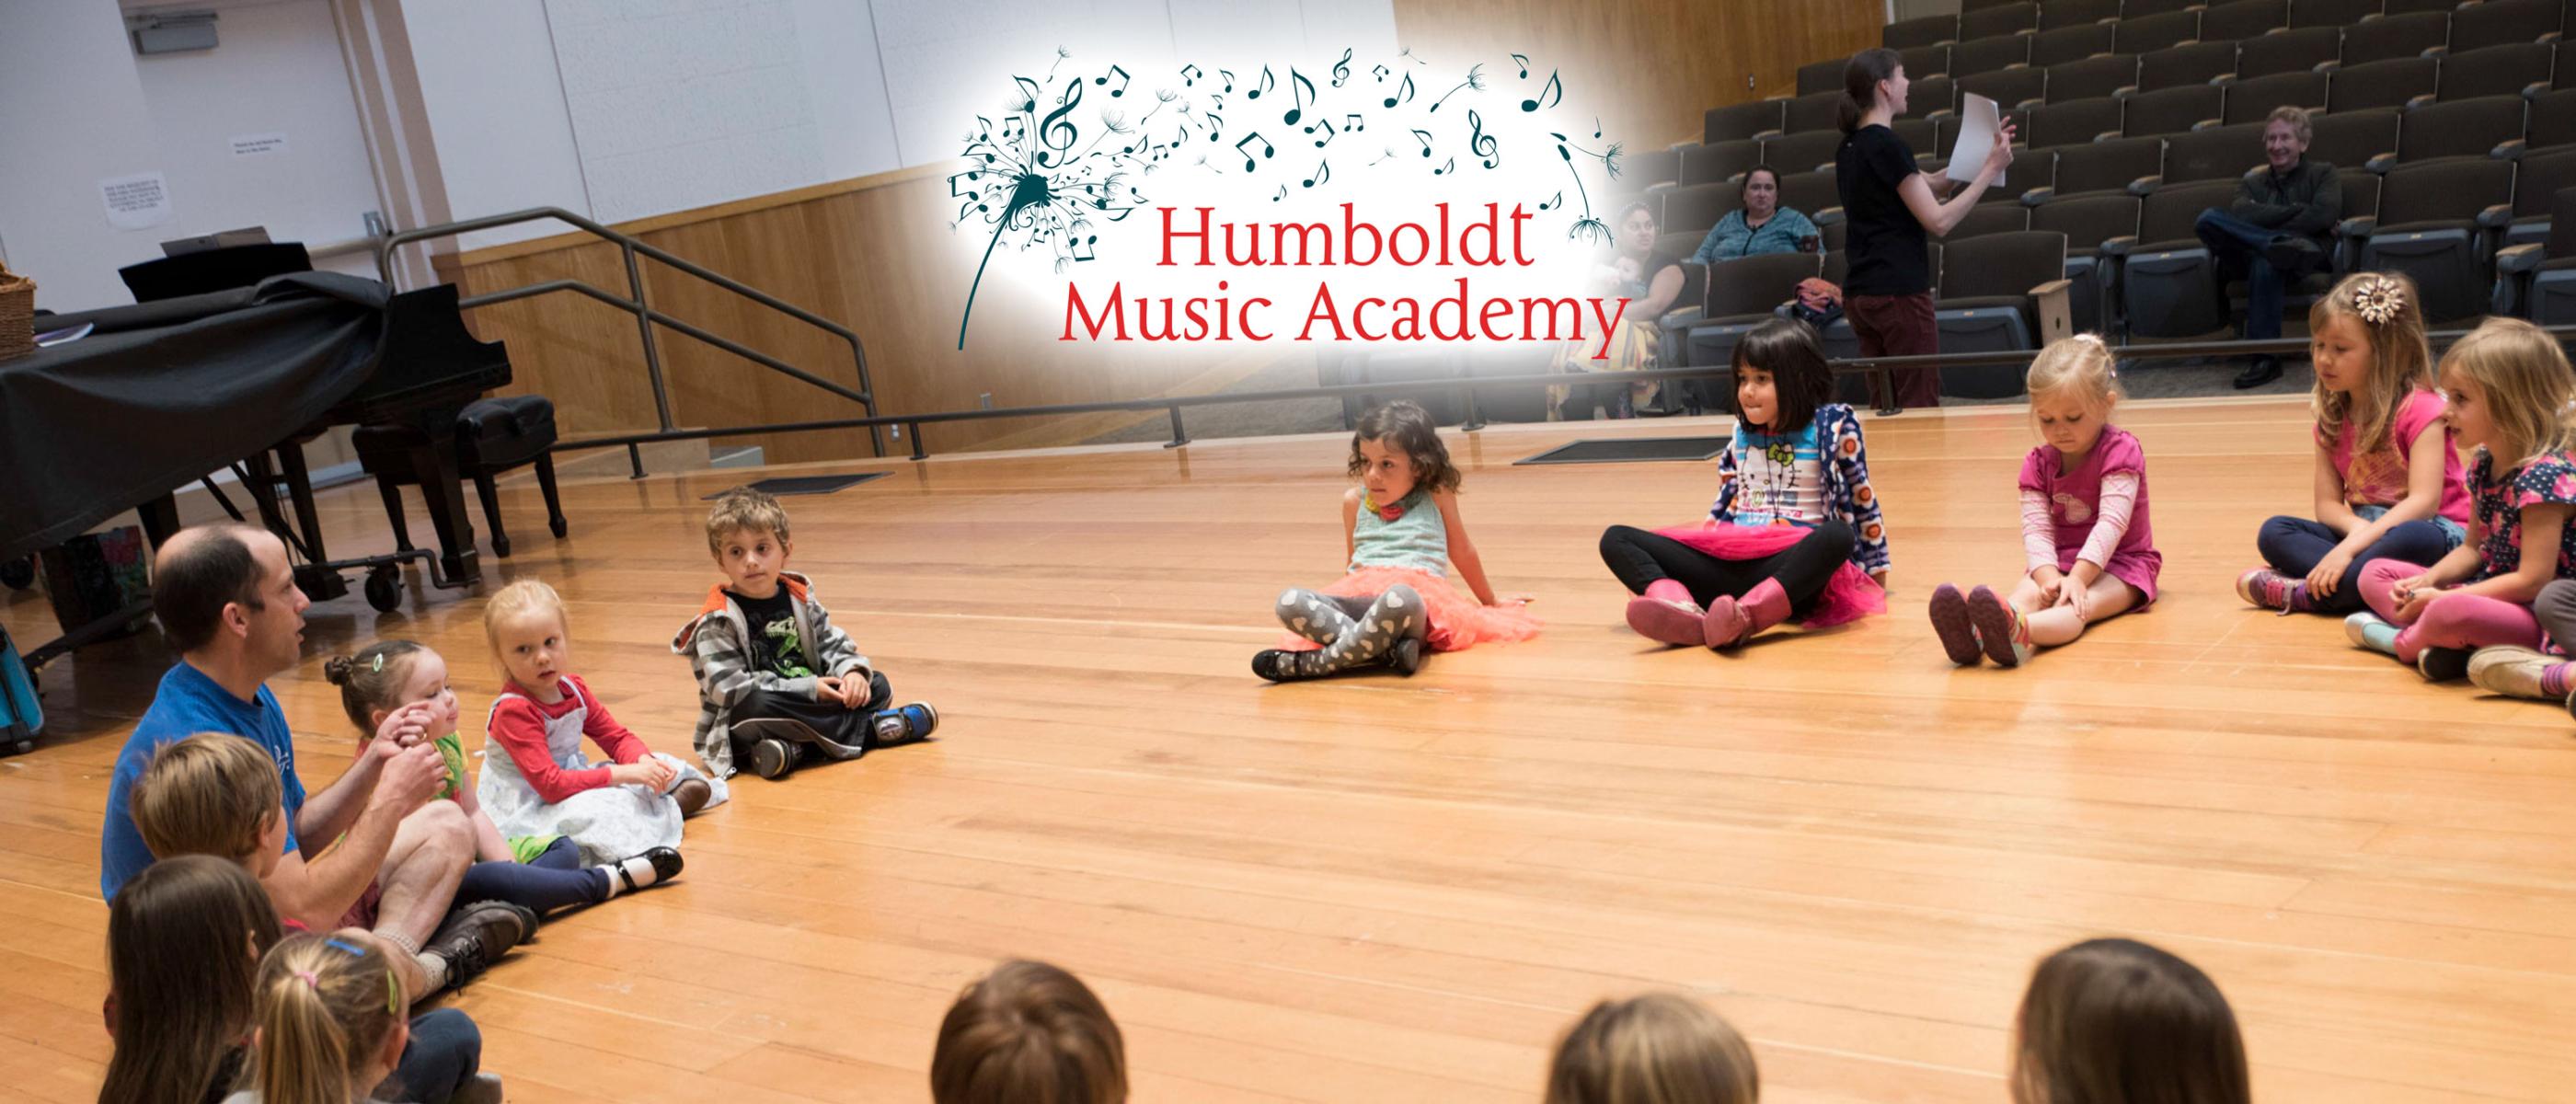 Humboldt Music Academy